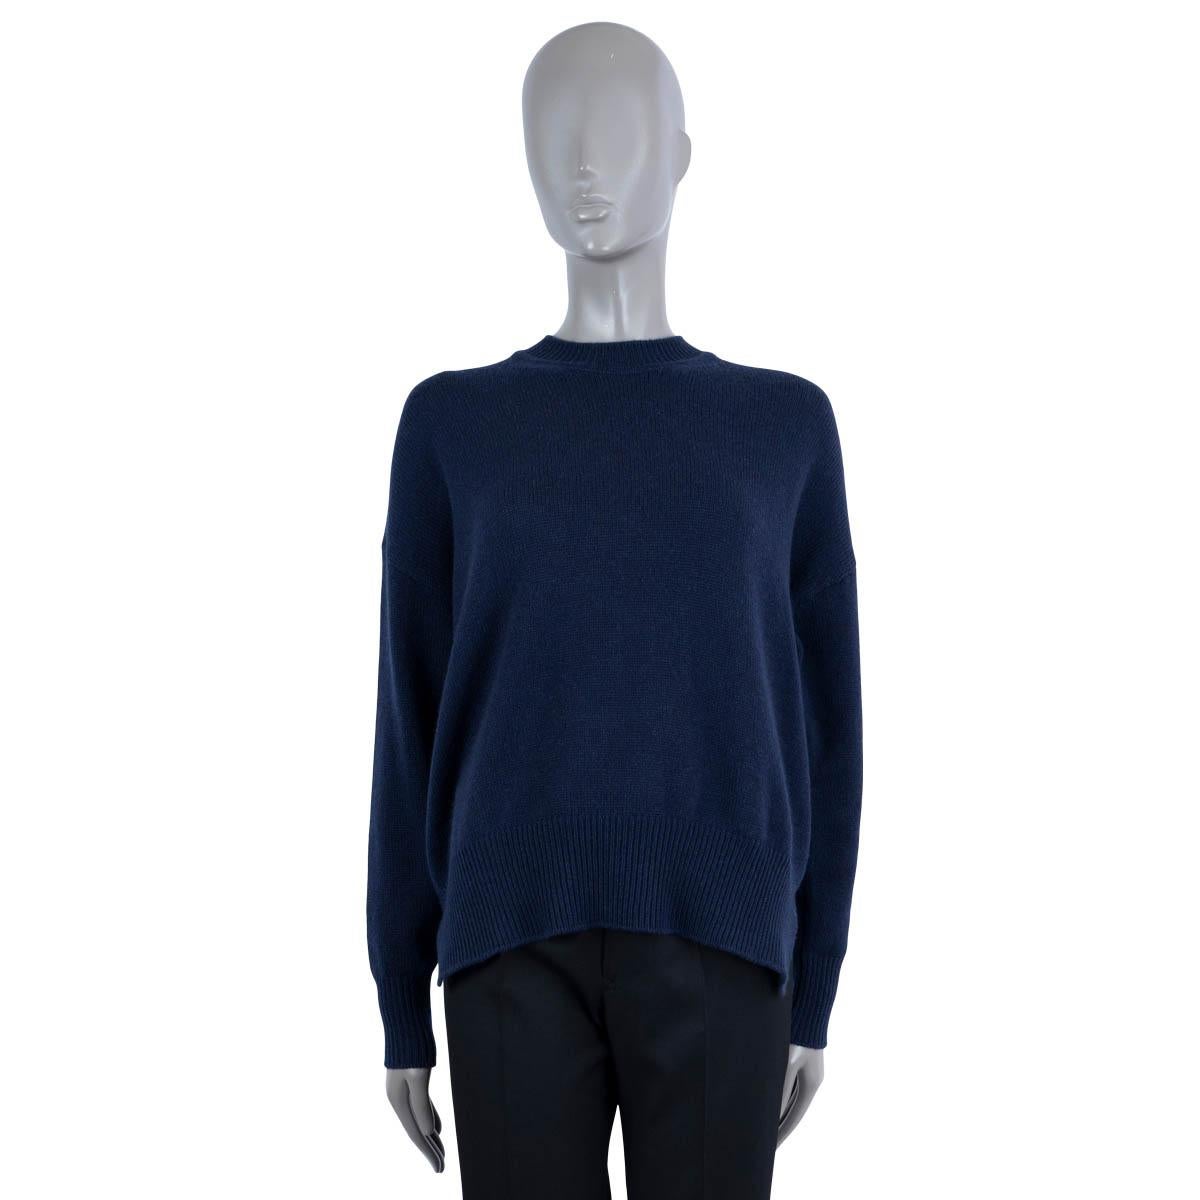 JIL SANDER navy blue cashmere SIDE SLIT CREWNECK Sweater 34 XS In Excellent Condition For Sale In Zürich, CH